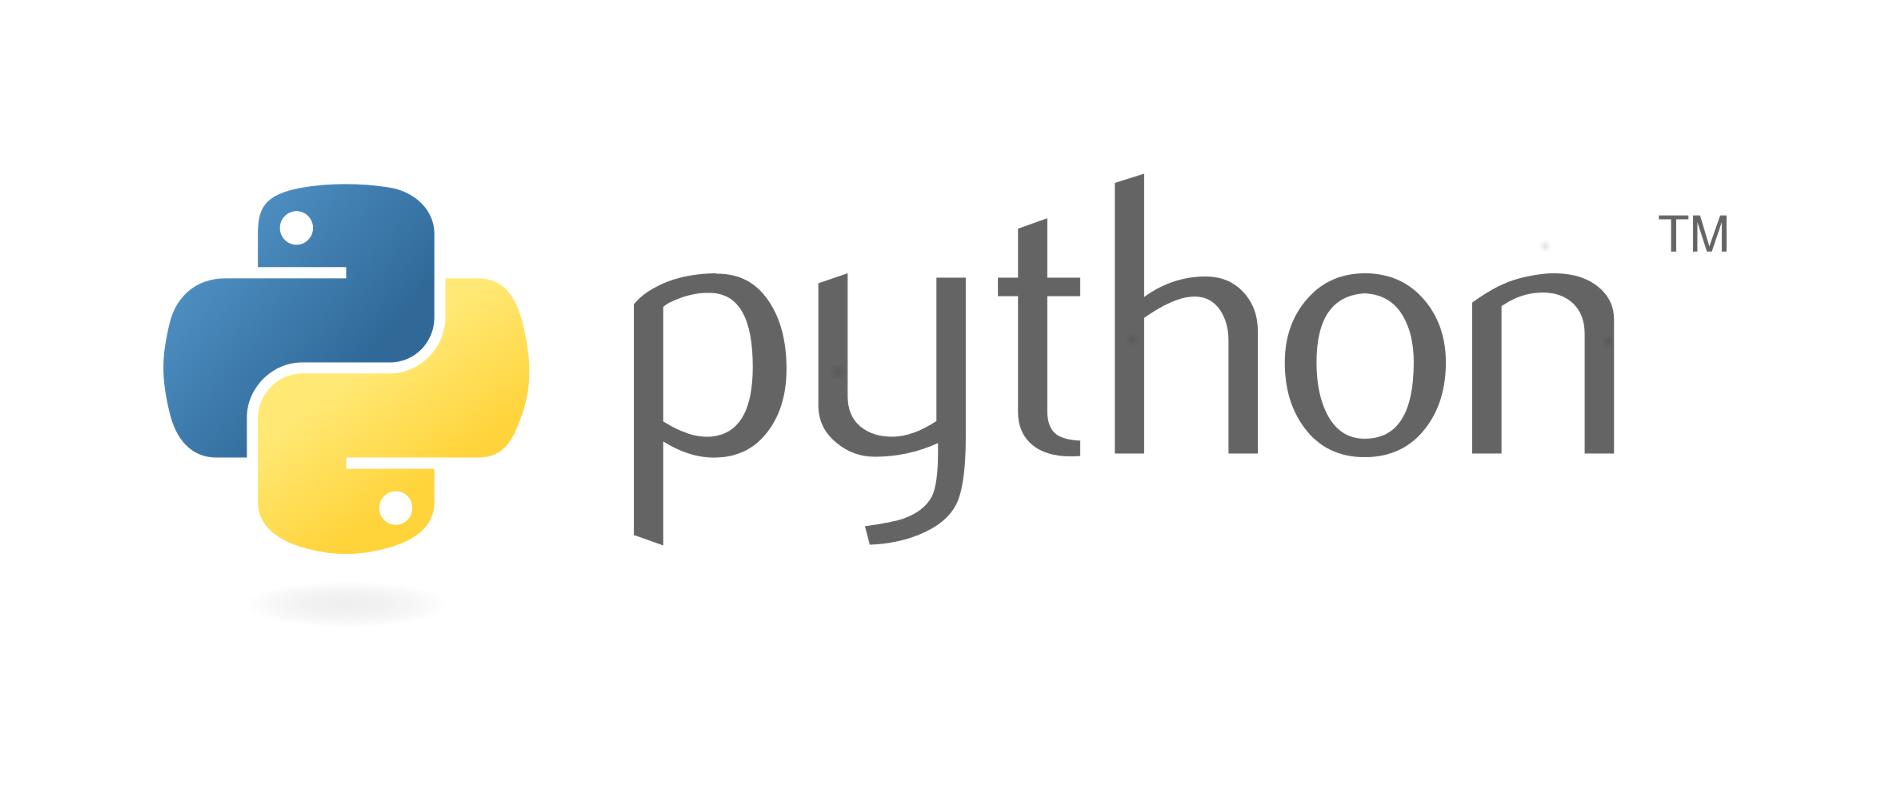 【Python】Apache + WSGI + Flask でWebアプリケーション構築